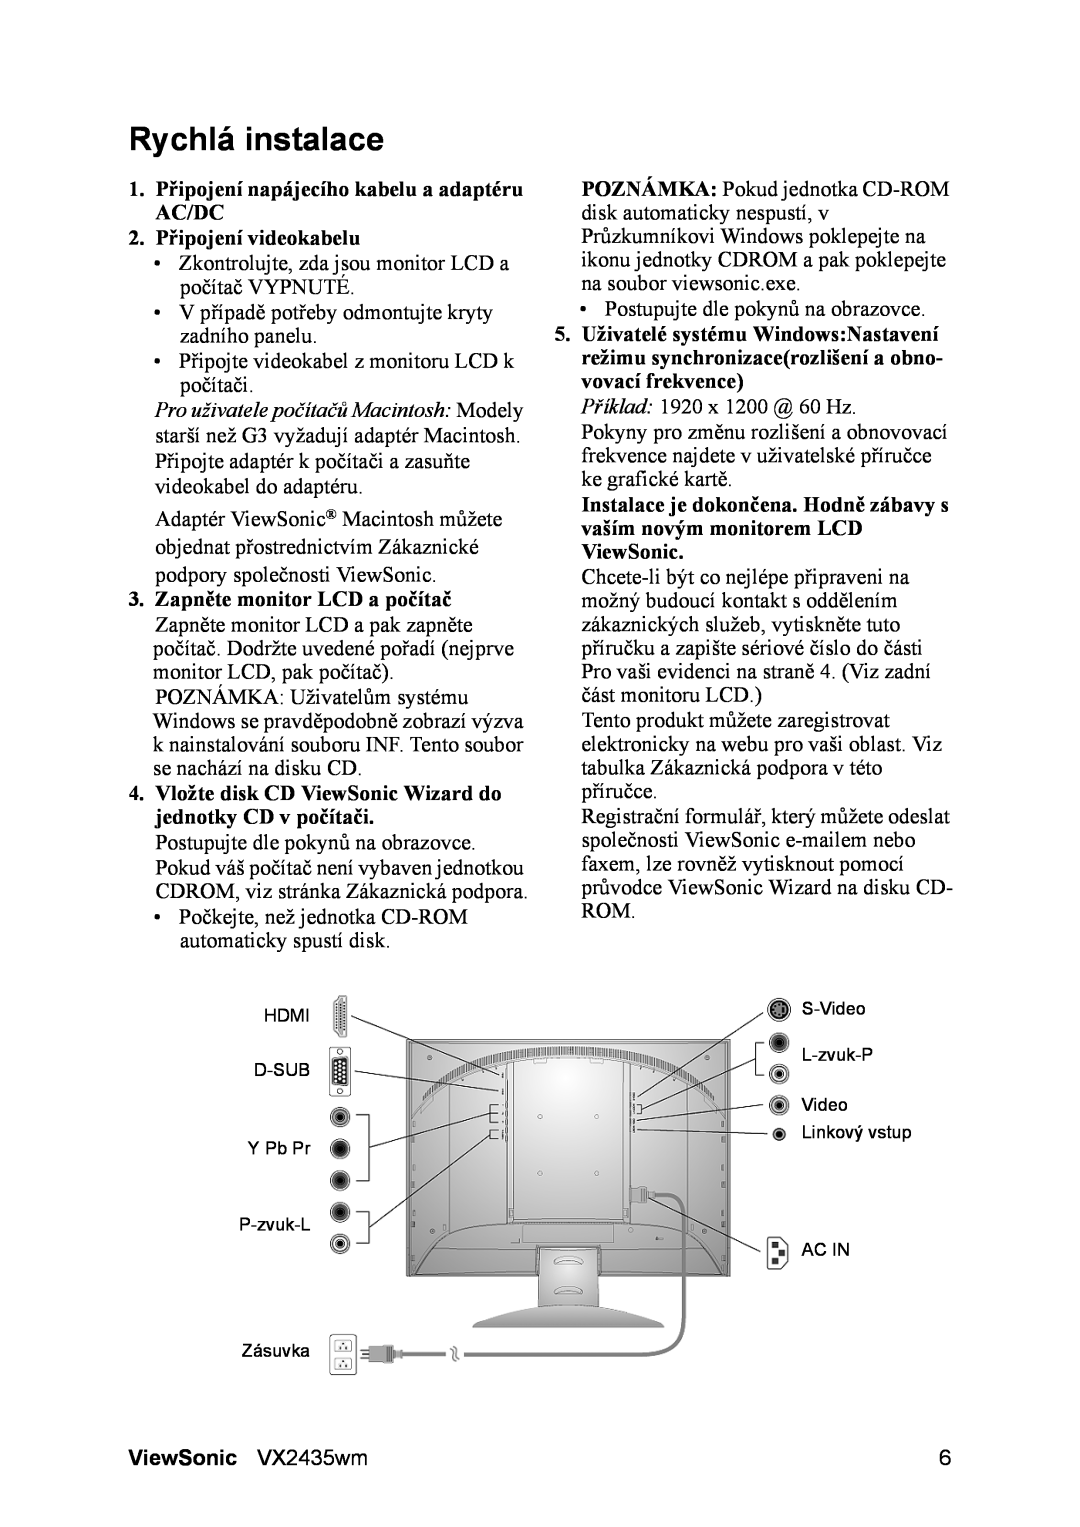 ViewSonic VS11449 manual Rychlá instalace, ViewSonic VX2435wm 